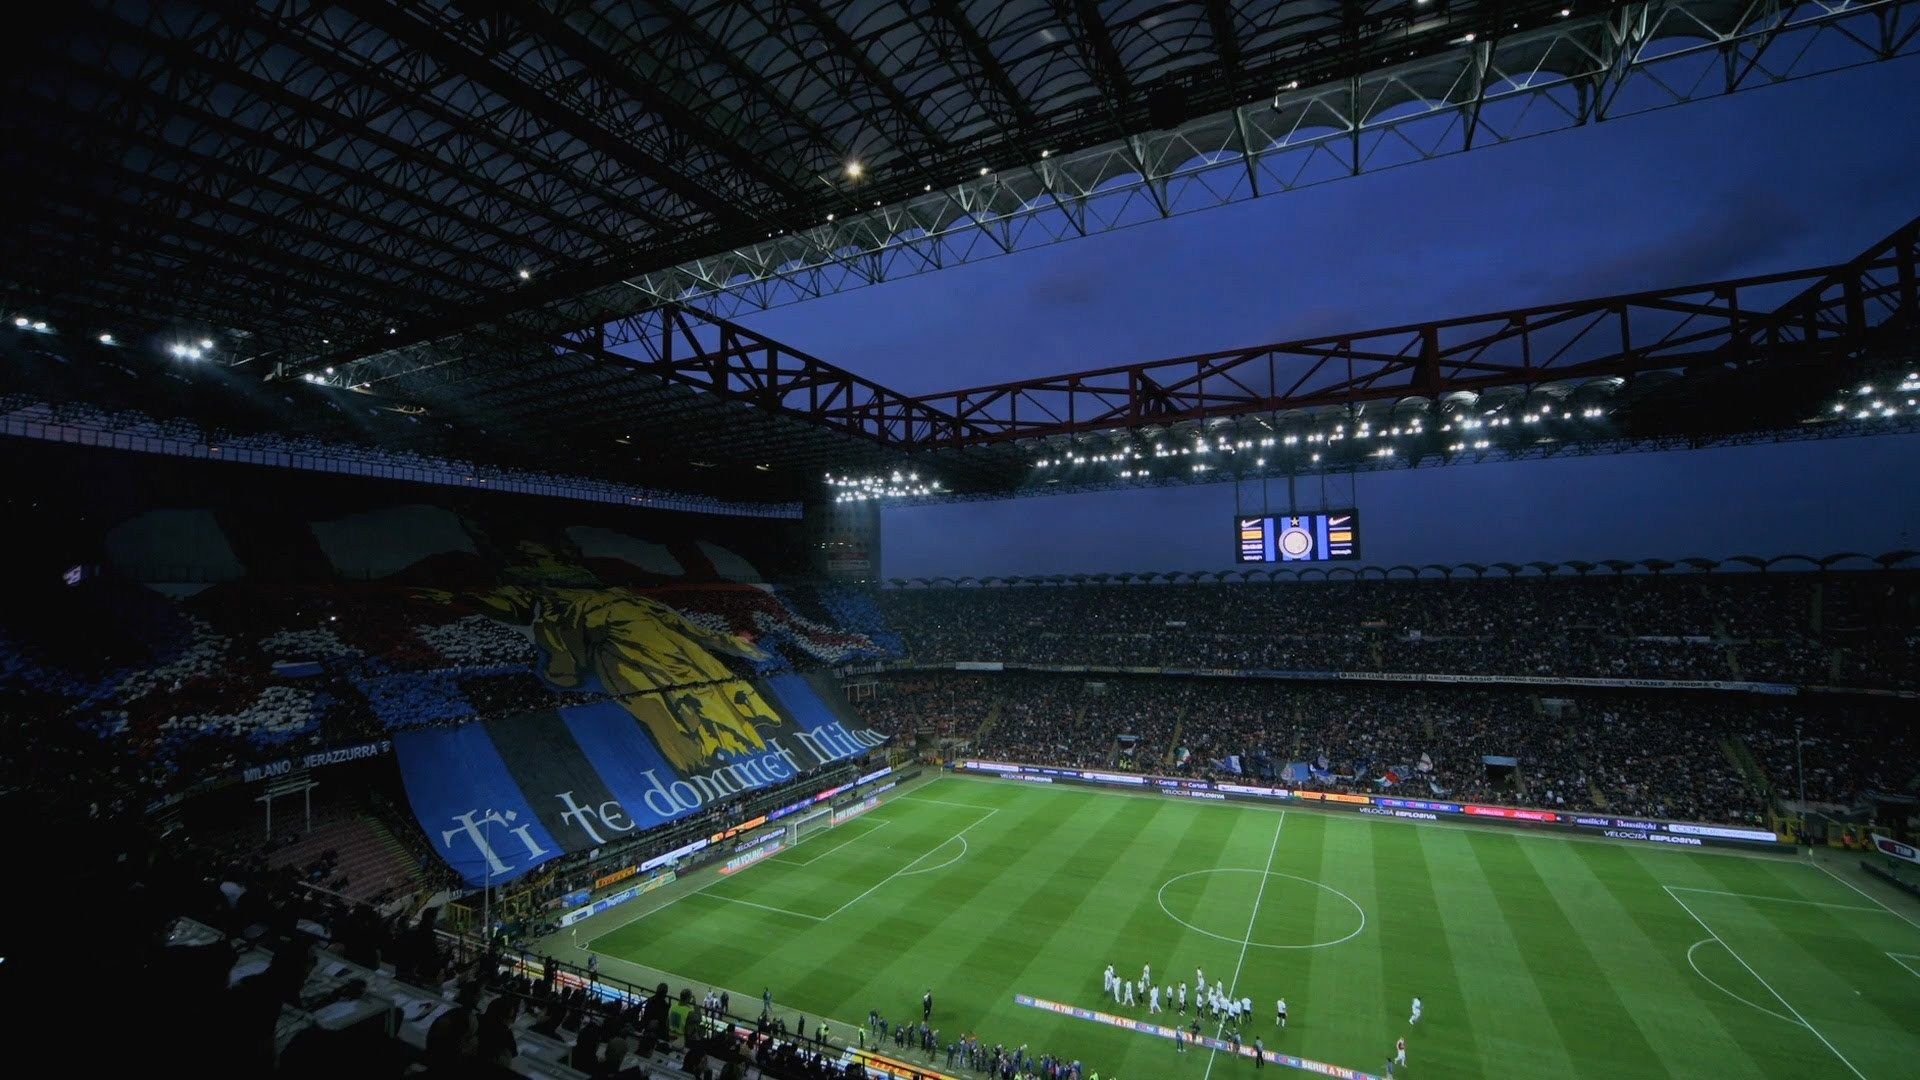 Inter: San Siro, a football stadium in the San Siro district of Milan, Italy. 1920x1080 Full HD Wallpaper.